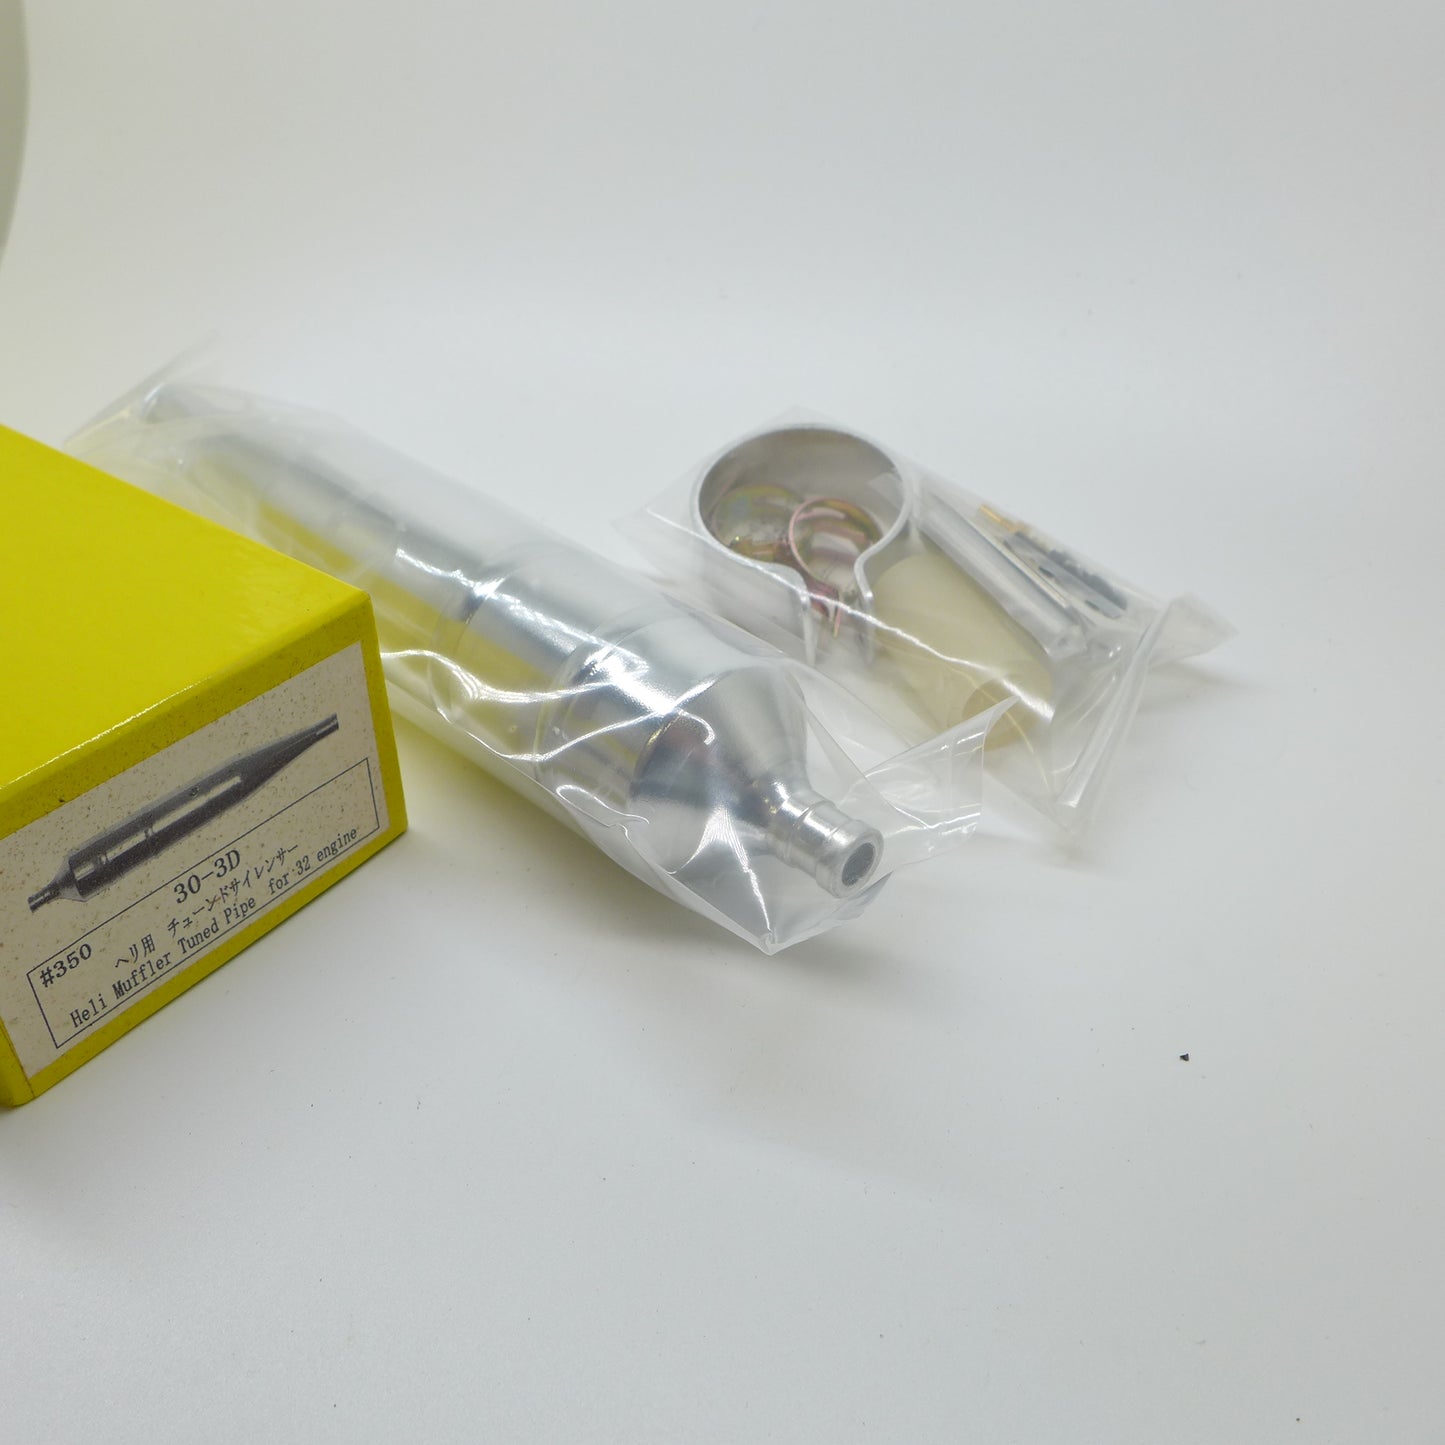 Hatori Schalldämpfer / Resorohr #350 30-3D Muffler  (Made in Japan)